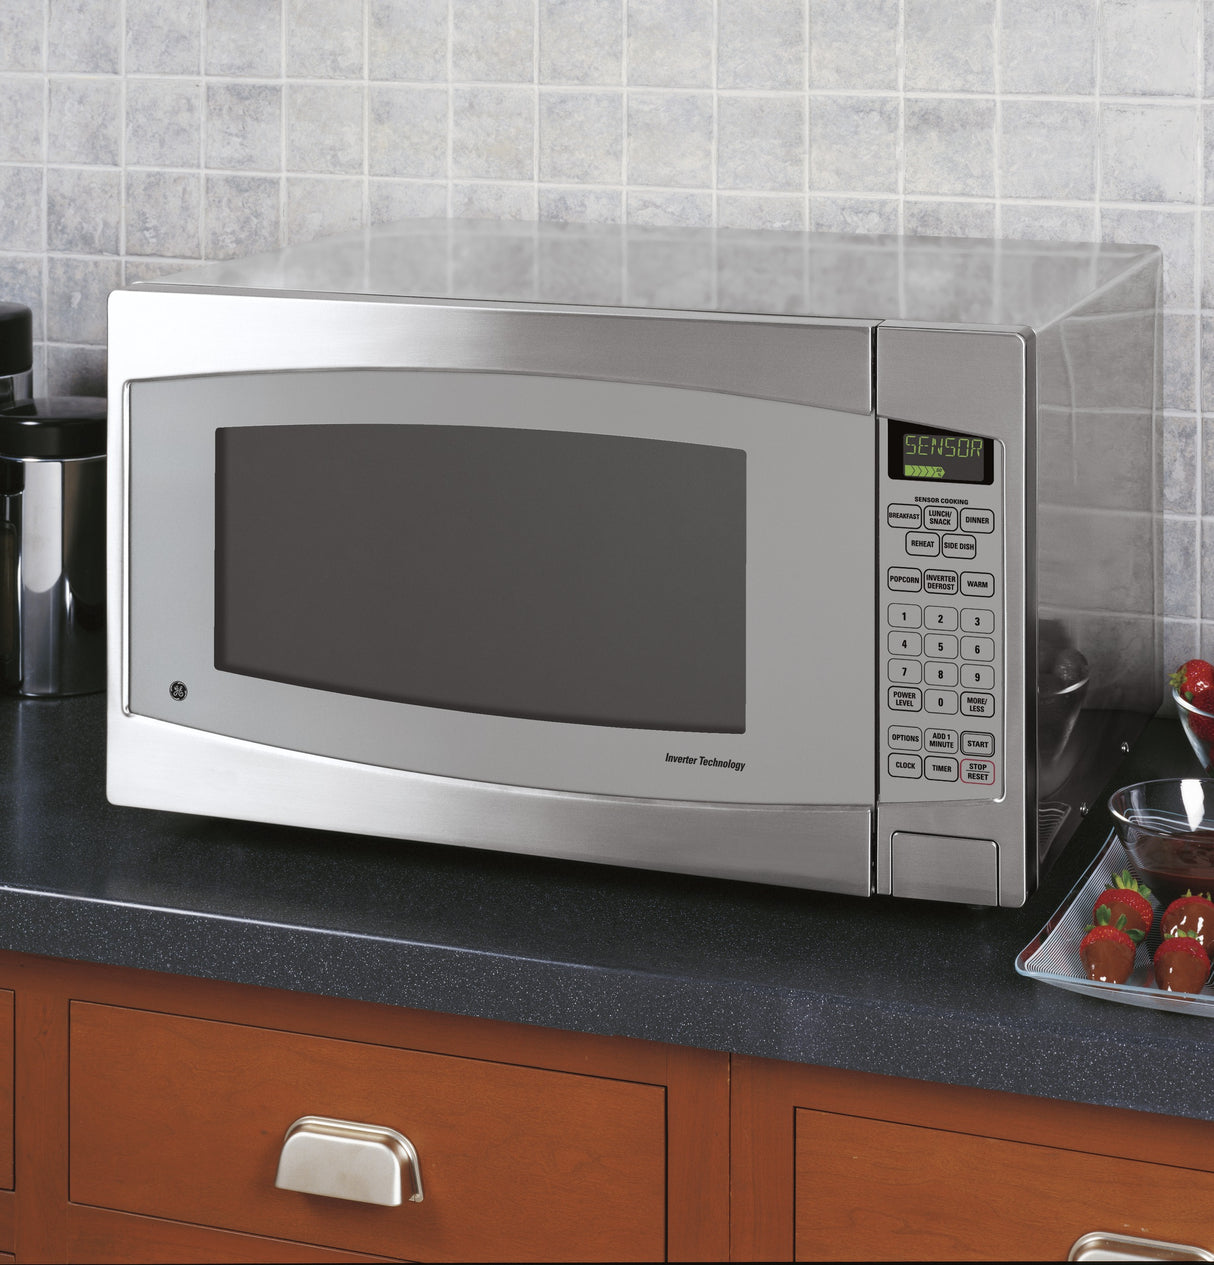 GE(R) 2.2 Cu. Ft. Capacity Countertop Microwave Oven - (JES2251SJ)